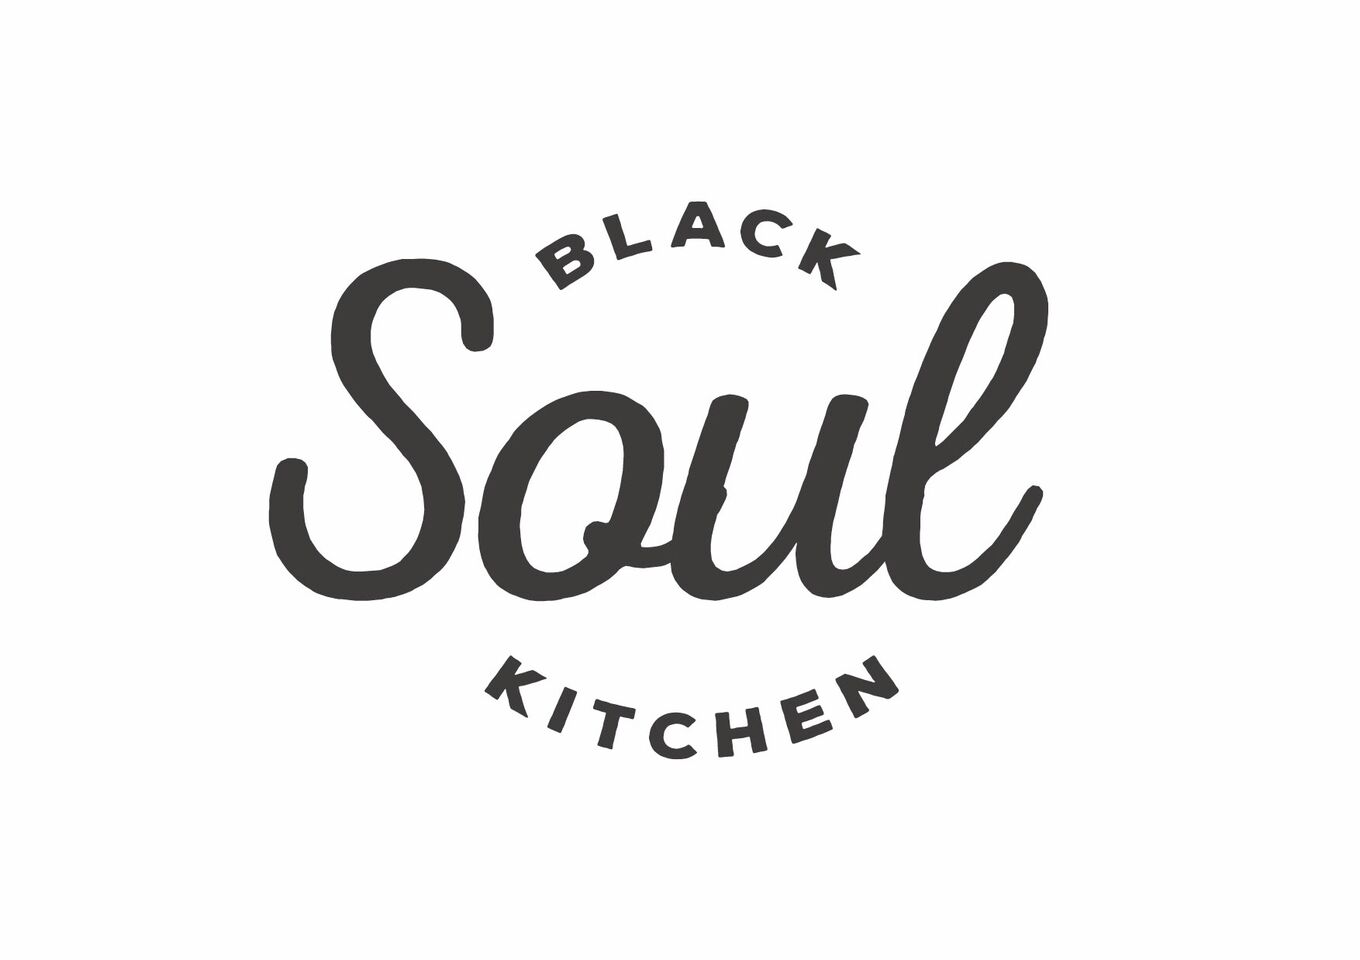 A photo of Black Soul Kitchen